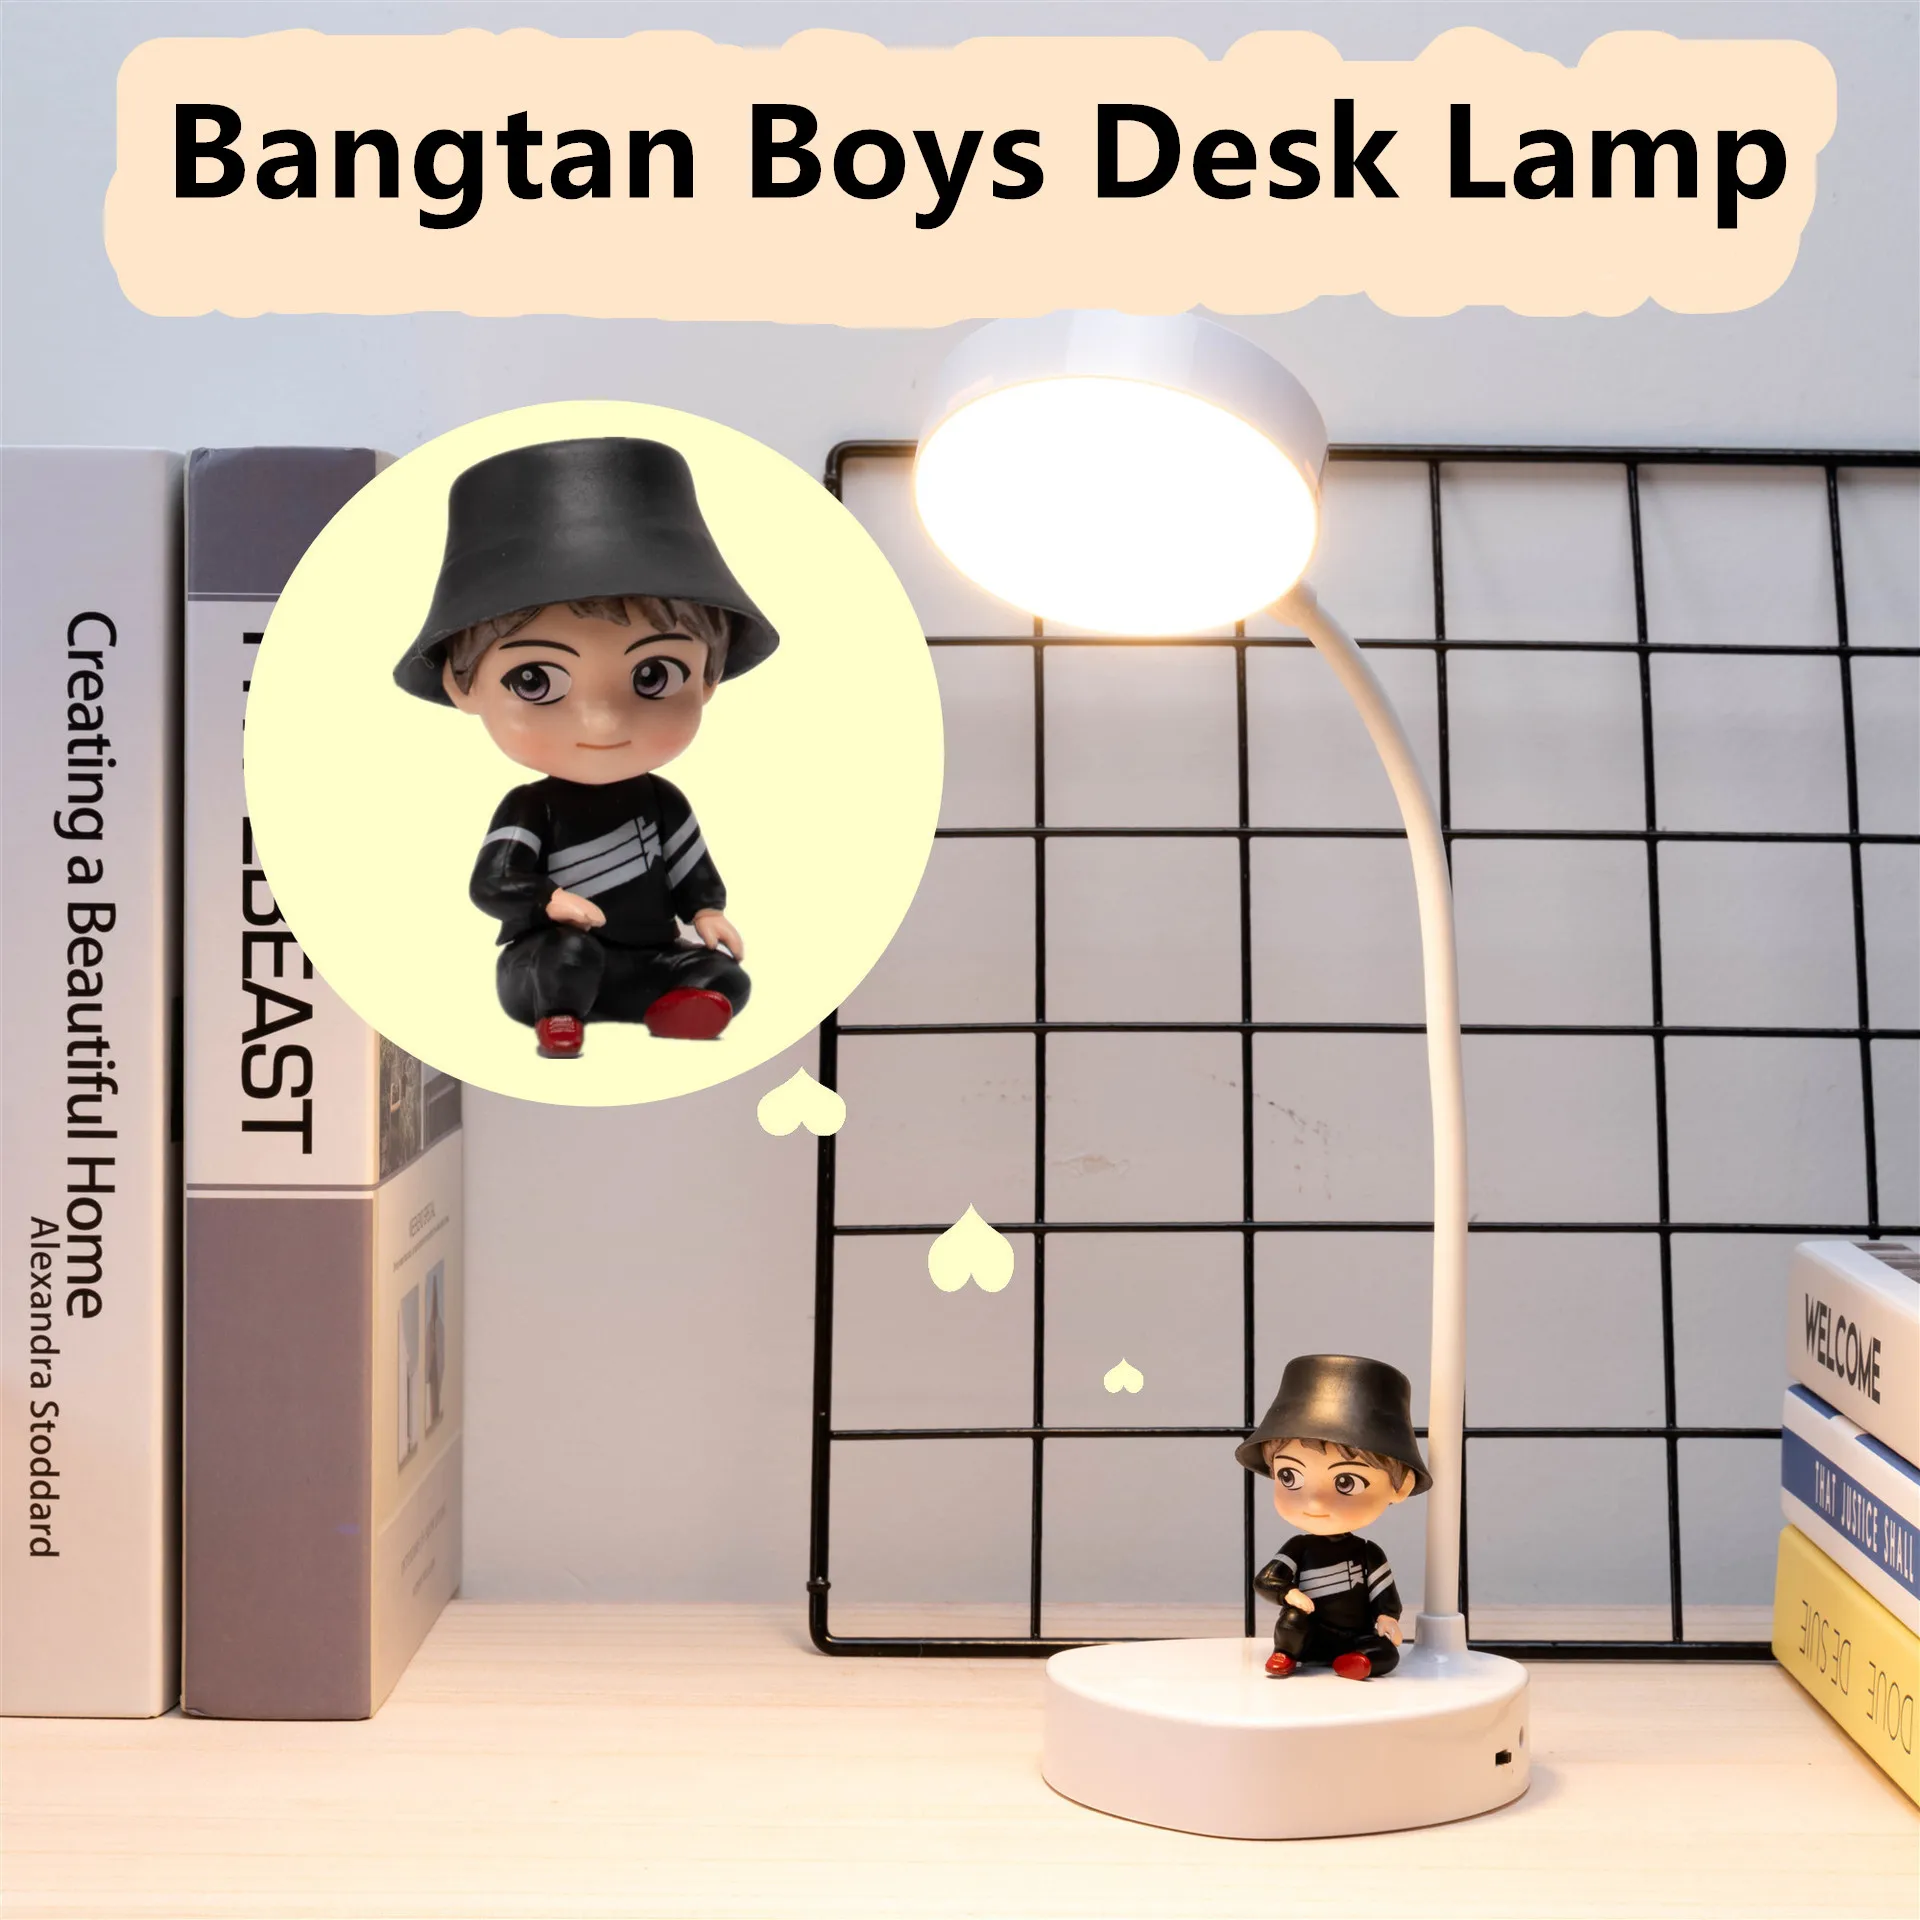 Bangtan Boys-figuras de acción TinyTAN, luz nocturna LED de carga USB, lámpara pequeña de escritorio en dormitorio, lámpara de mesa plegable, nuevo